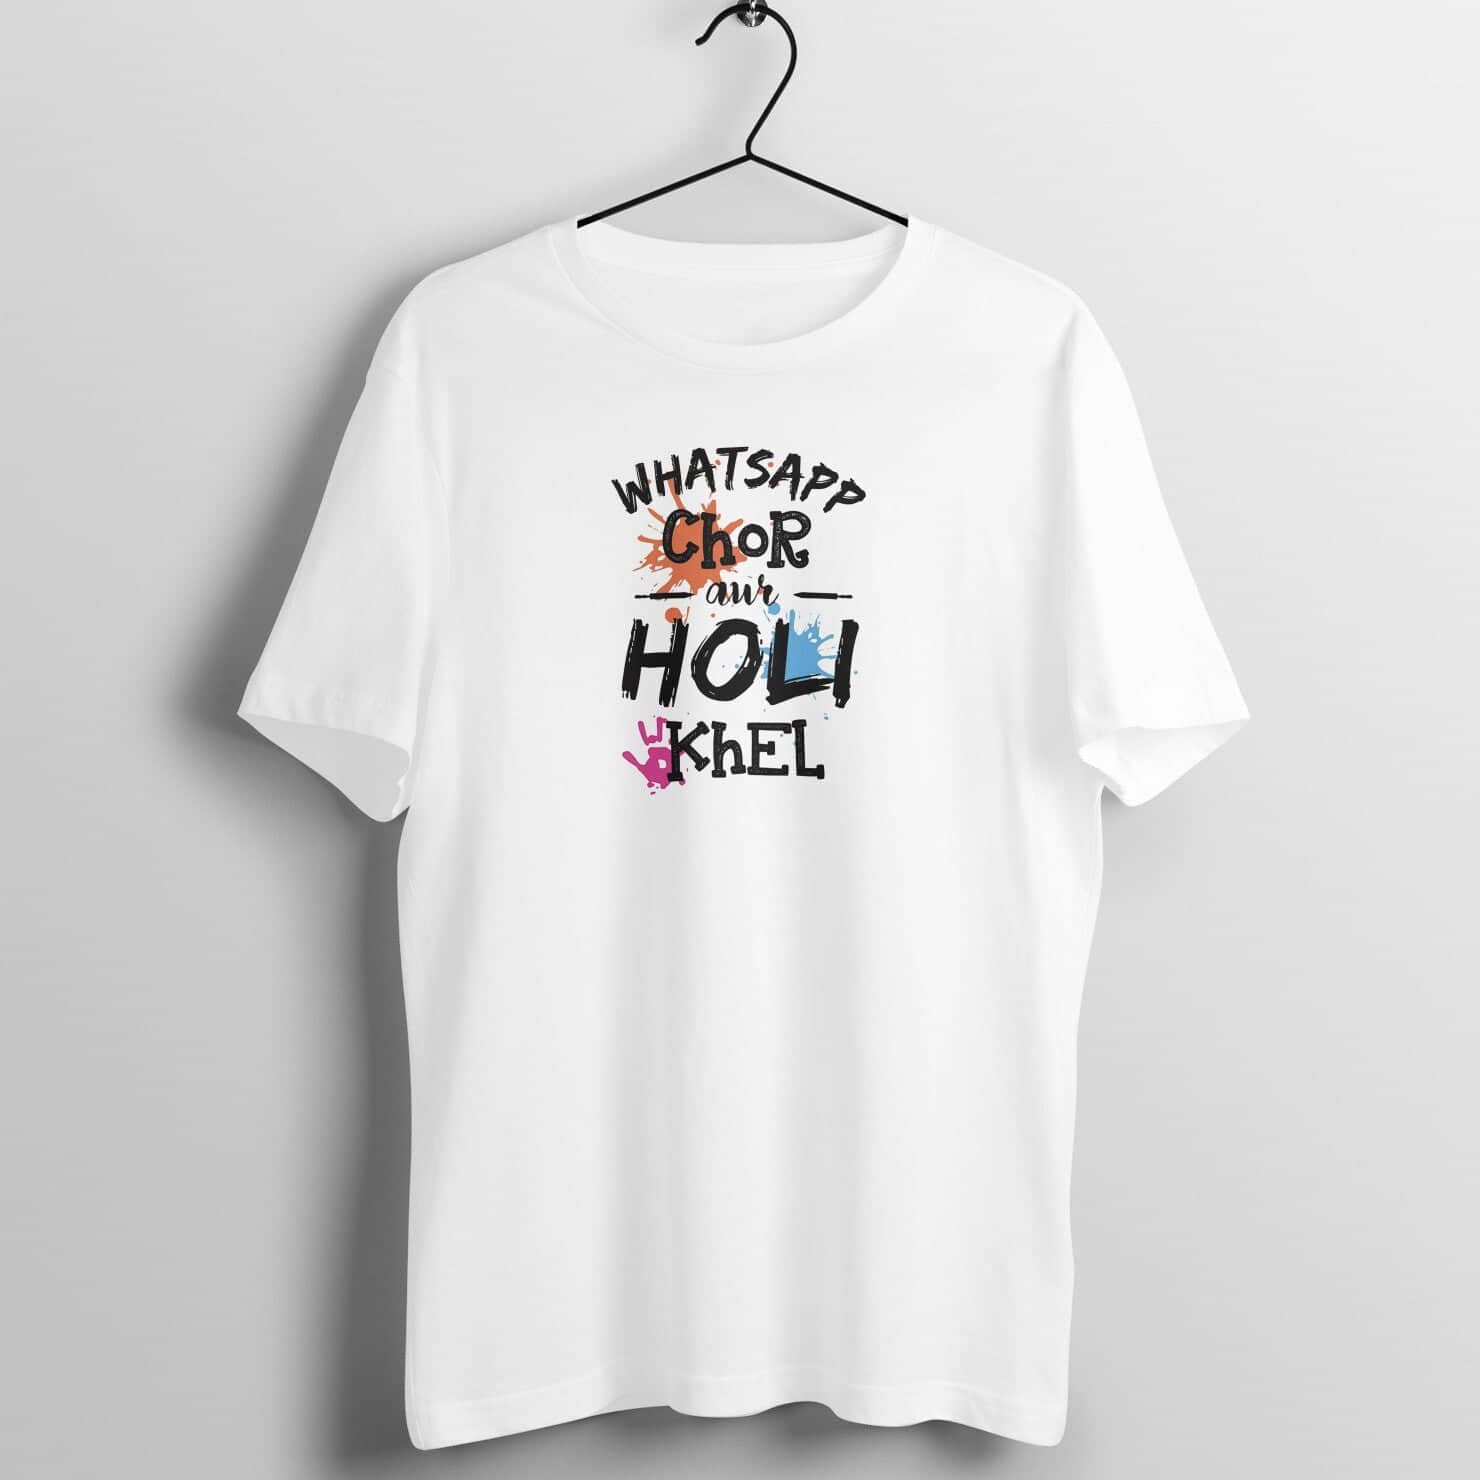 Whatsapp Chor Aur Holi Khel Special White T Shirt for Men and Women freeshipping - Catch My Drift India